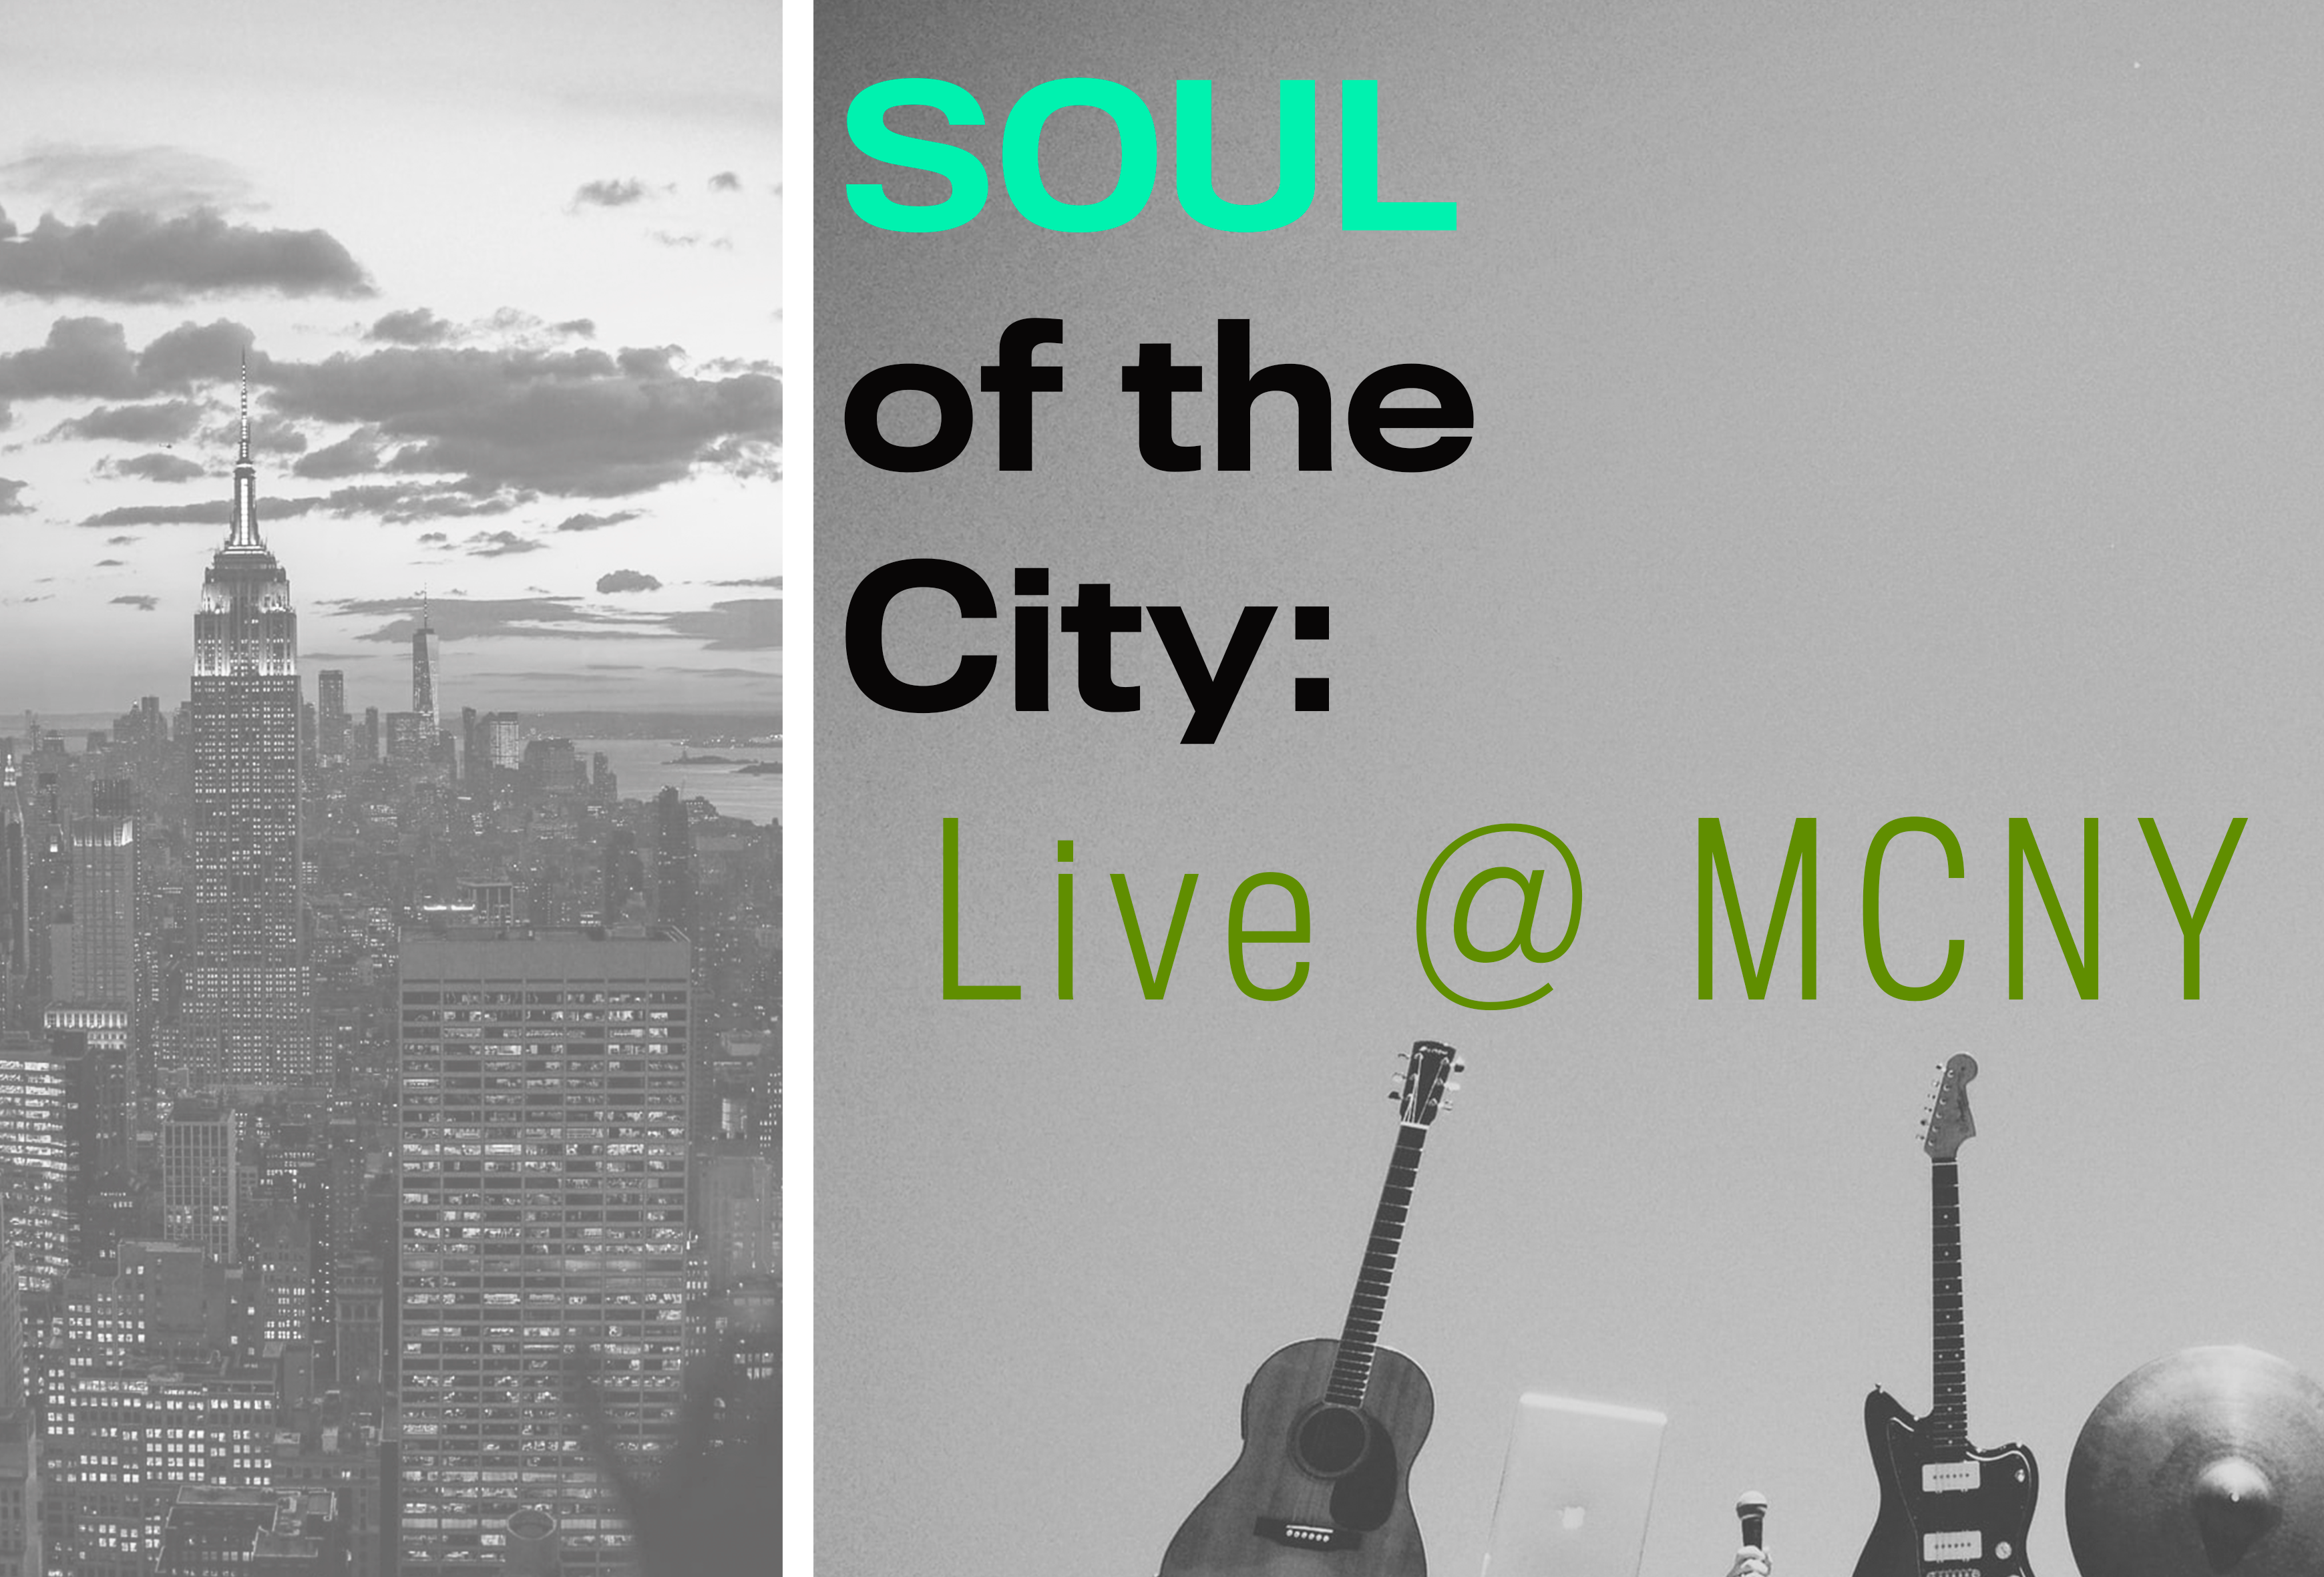 Soul of the City 시리즈 이미지: 공중에 떠 있는 마천루와 악기.